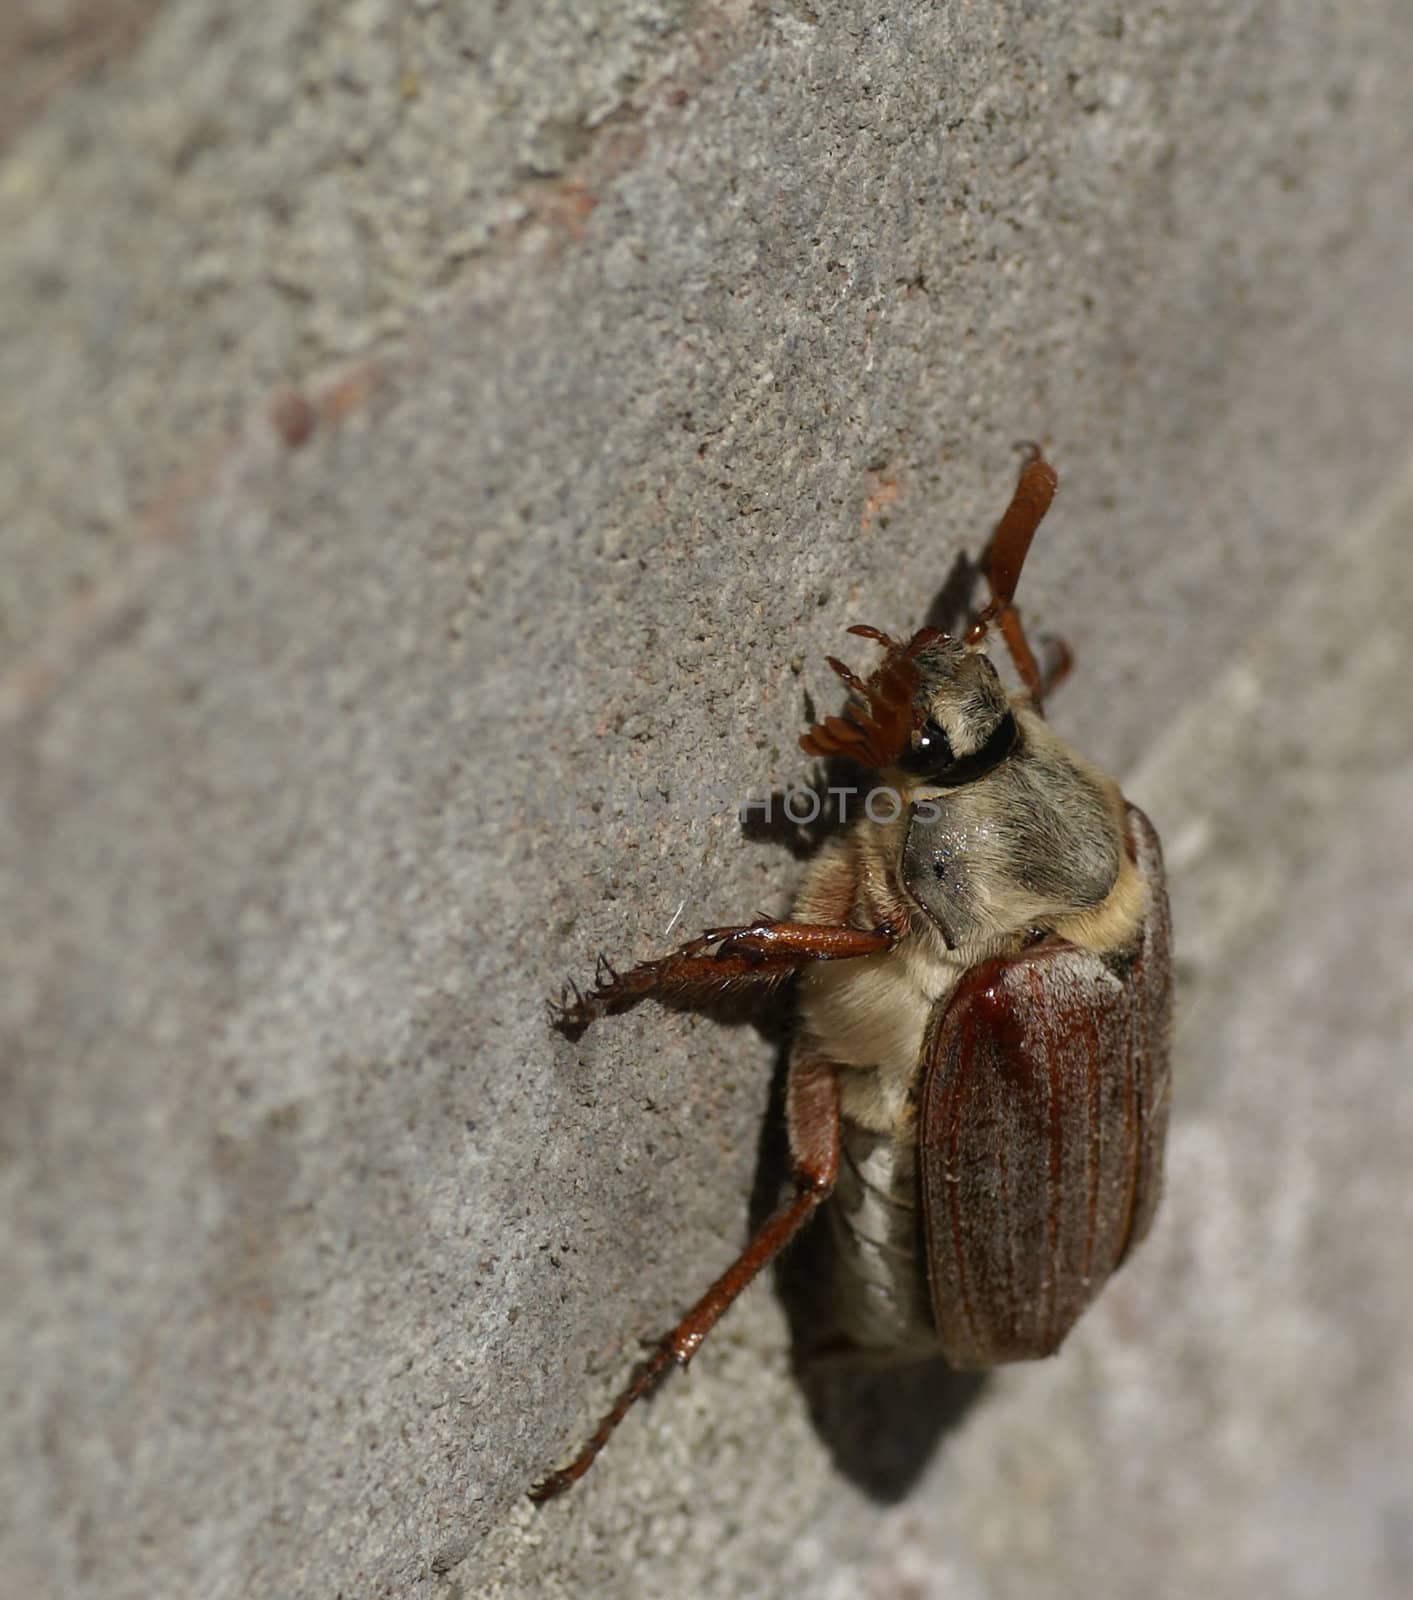 Maybug sitting on a brick wall.